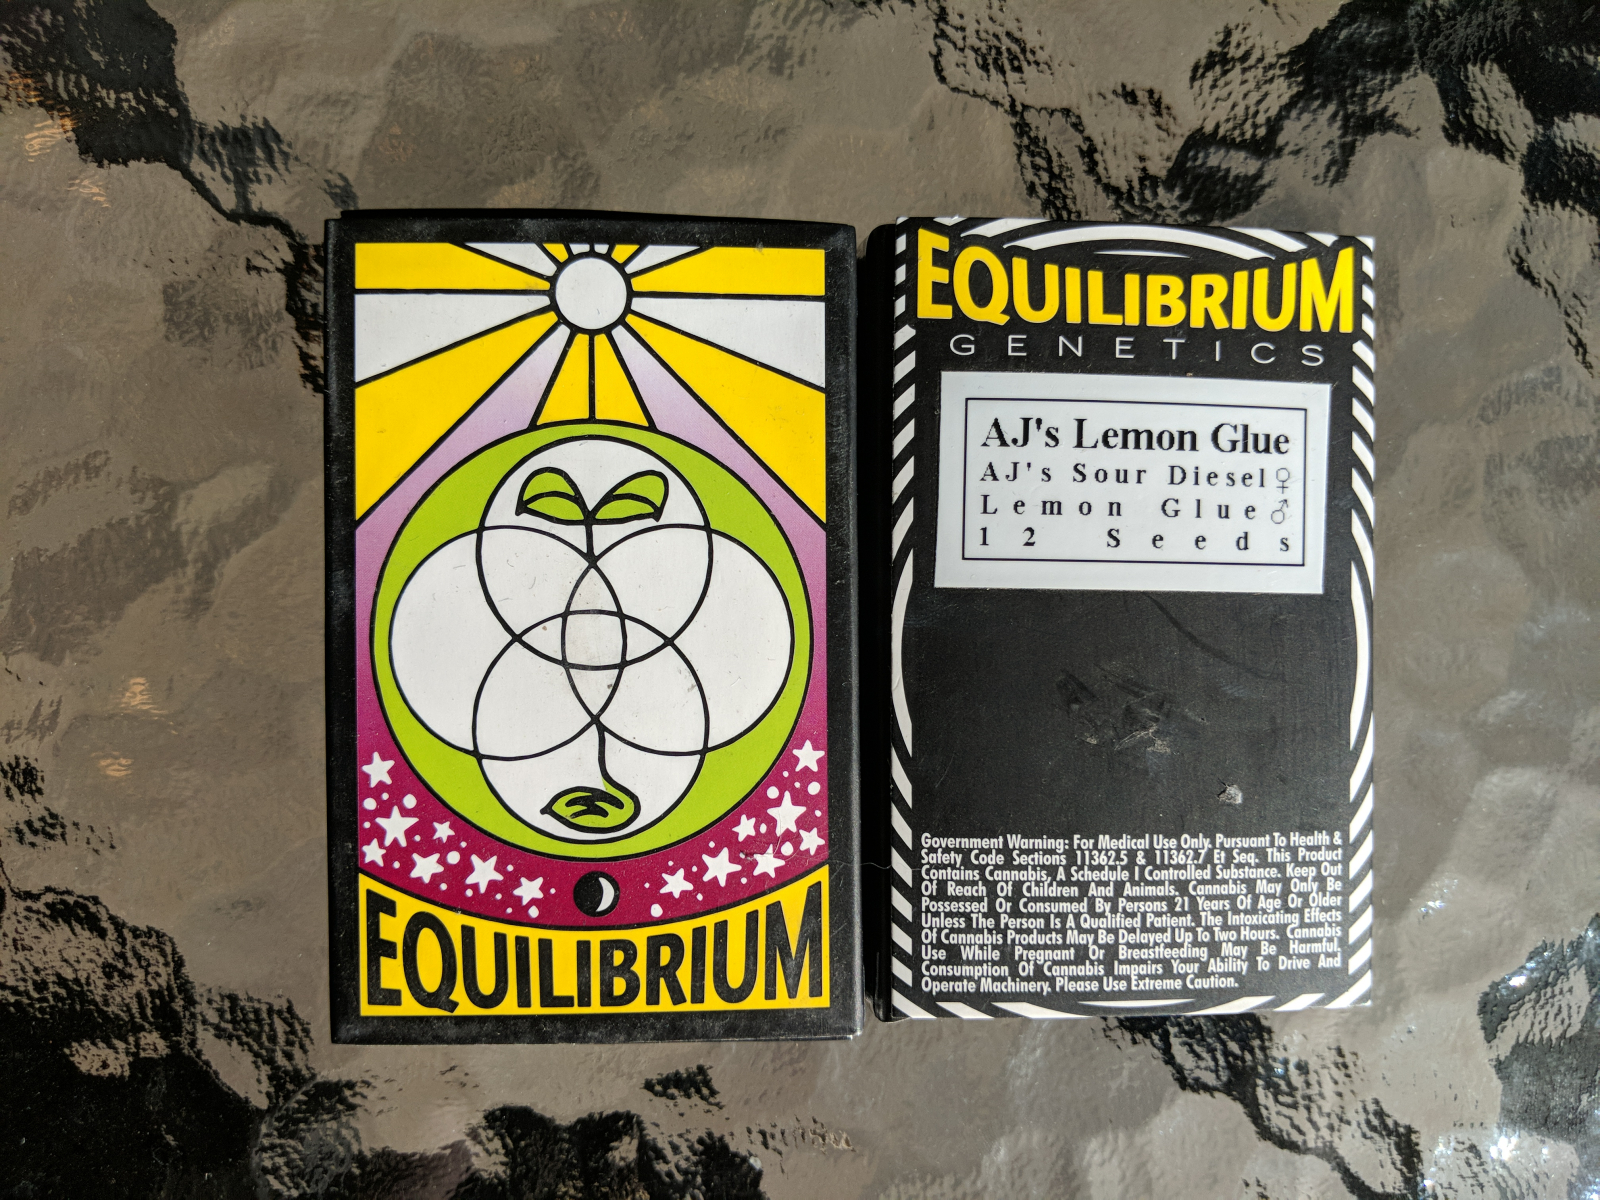 Equilibrium genetics AJ's lemon glue 12 regular seeds